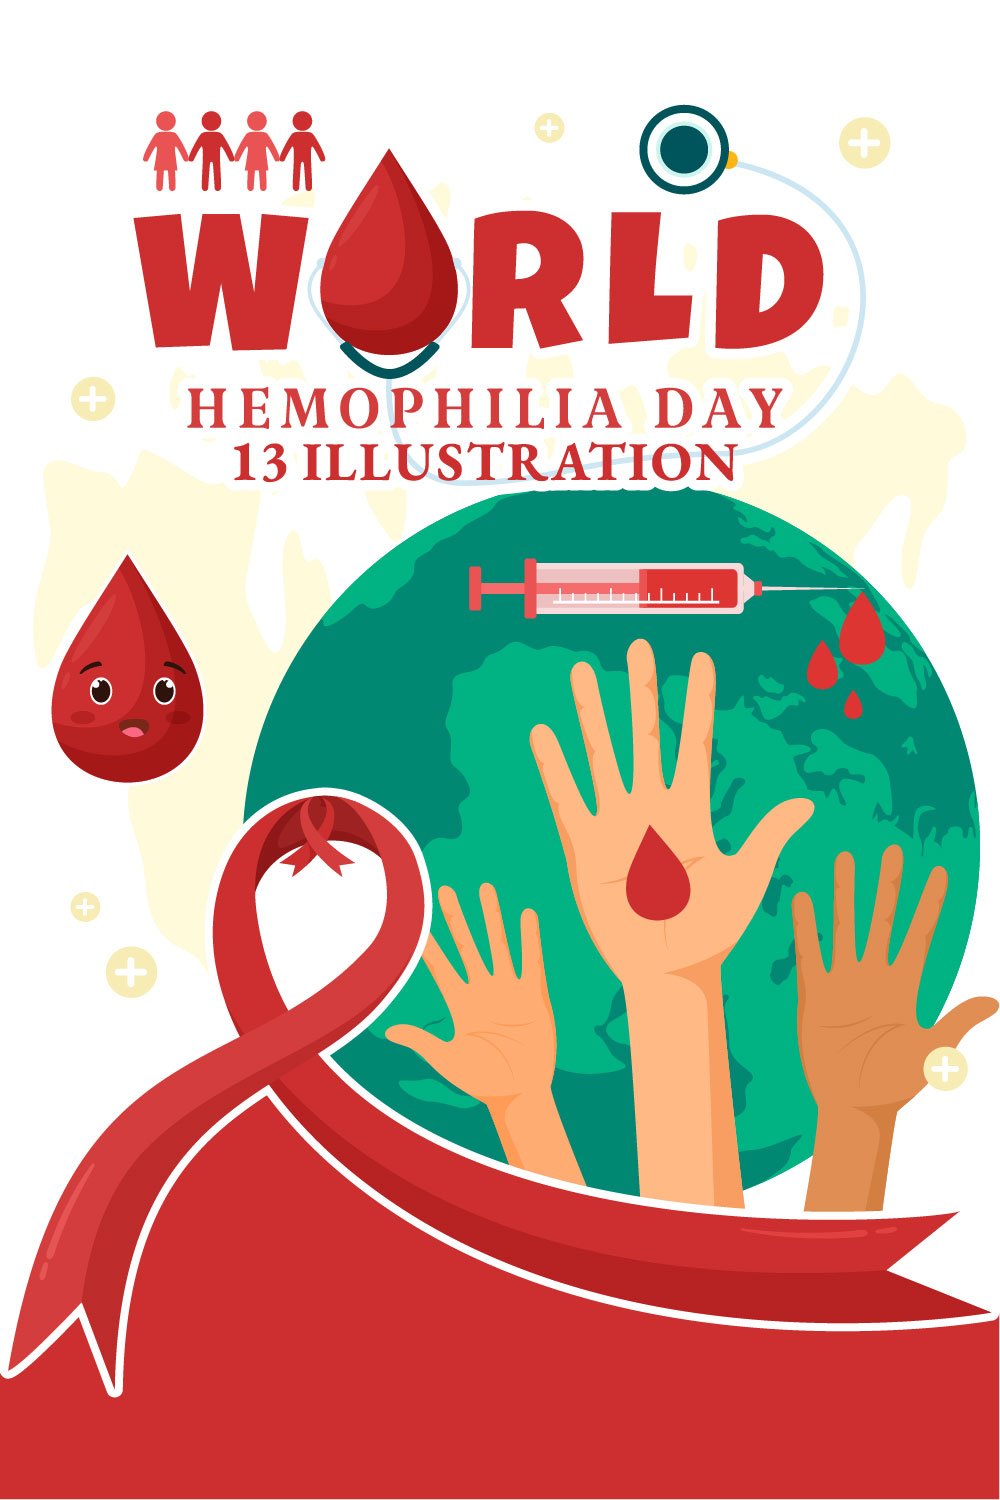 13 World Hemophilia Day Illustration pinterest preview image.